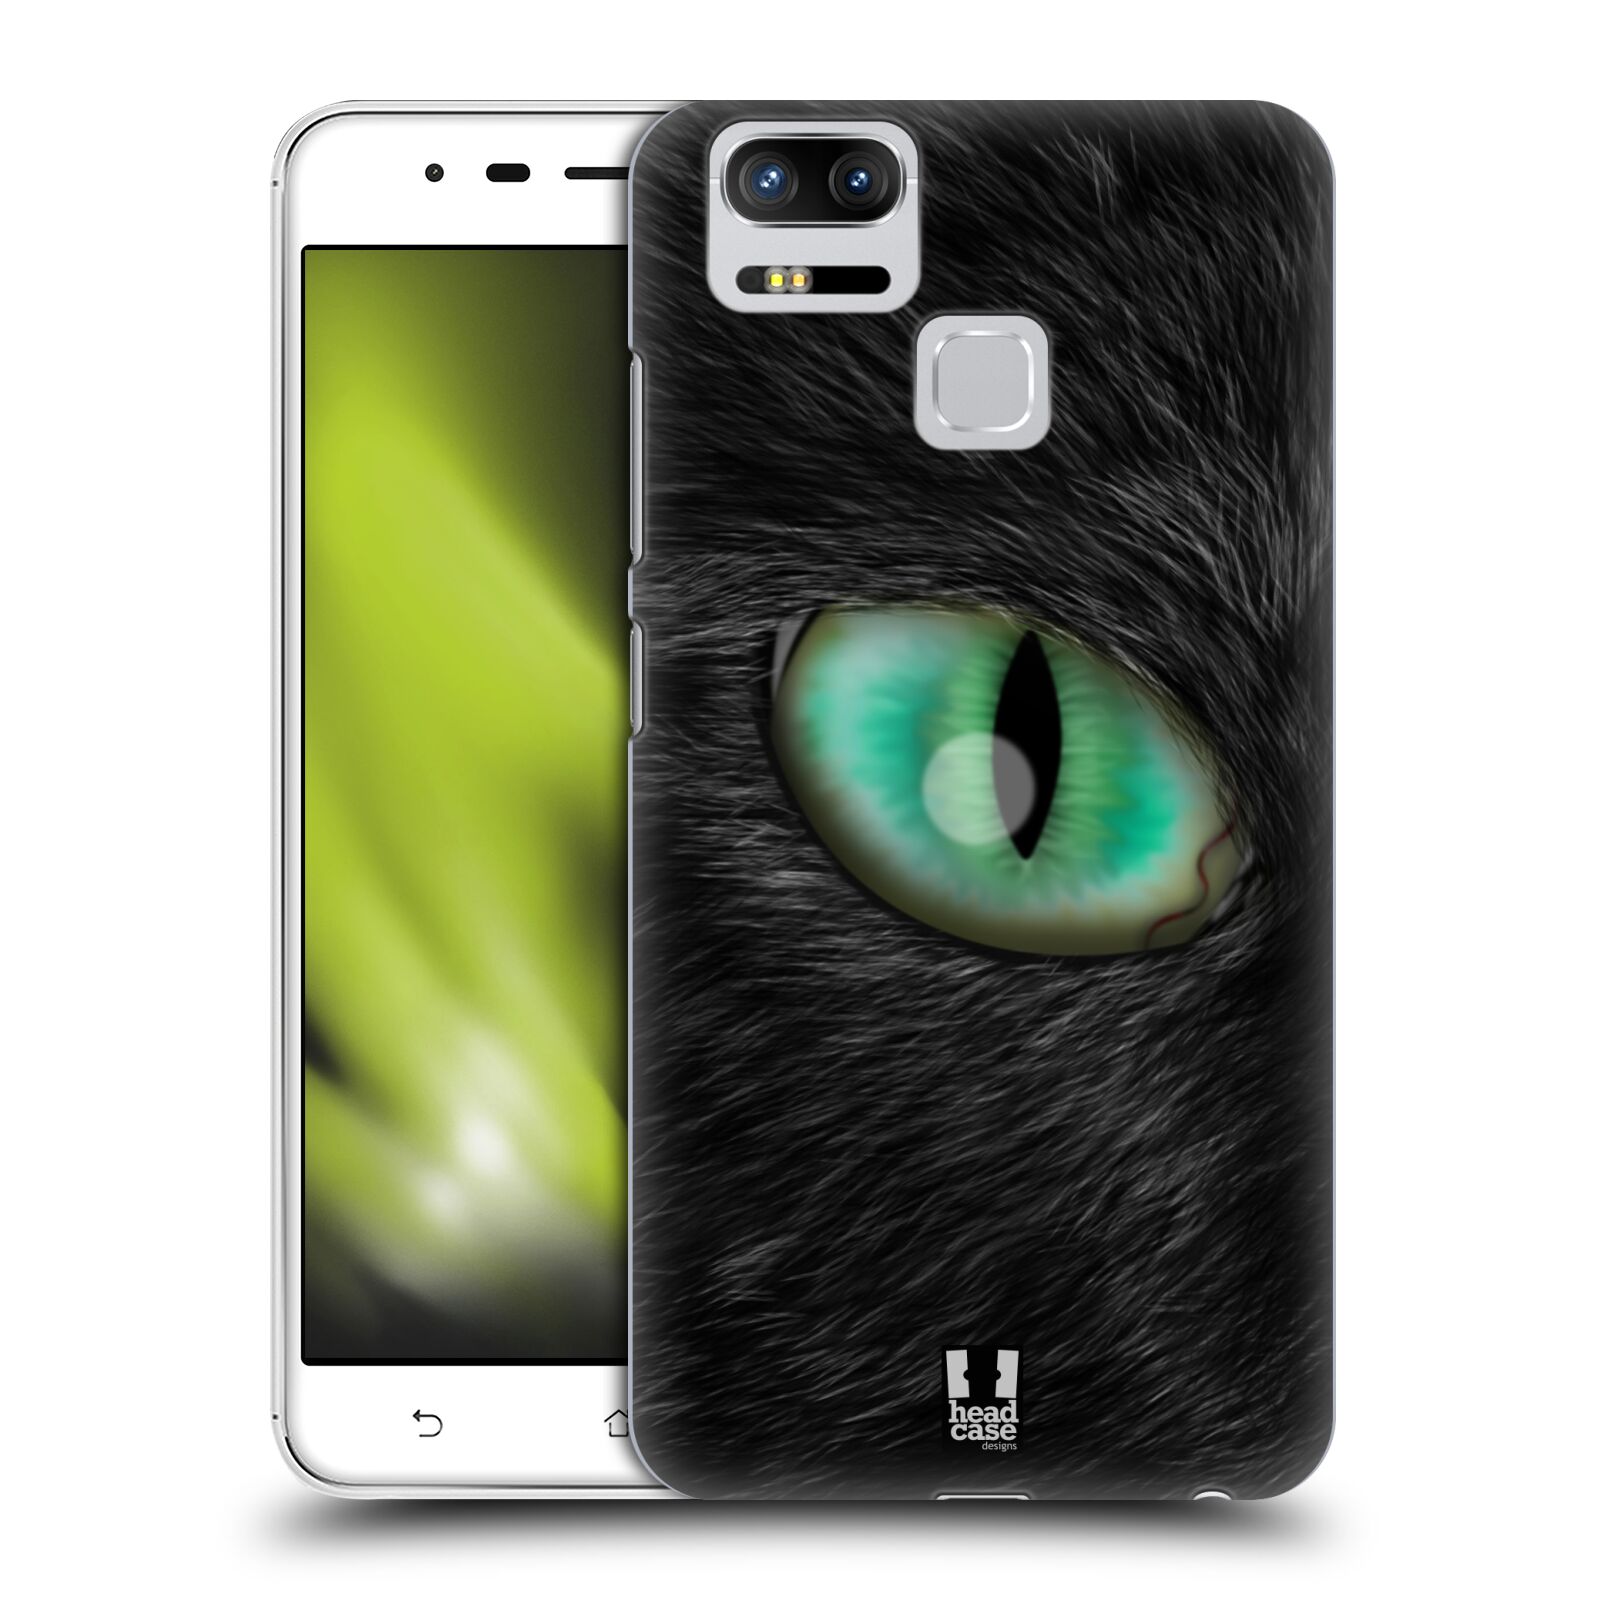 HEAD CASE plastový obal na mobil Asus Zenfone 3 Zoom ZE553KL vzor pohled zvířete oko kočka